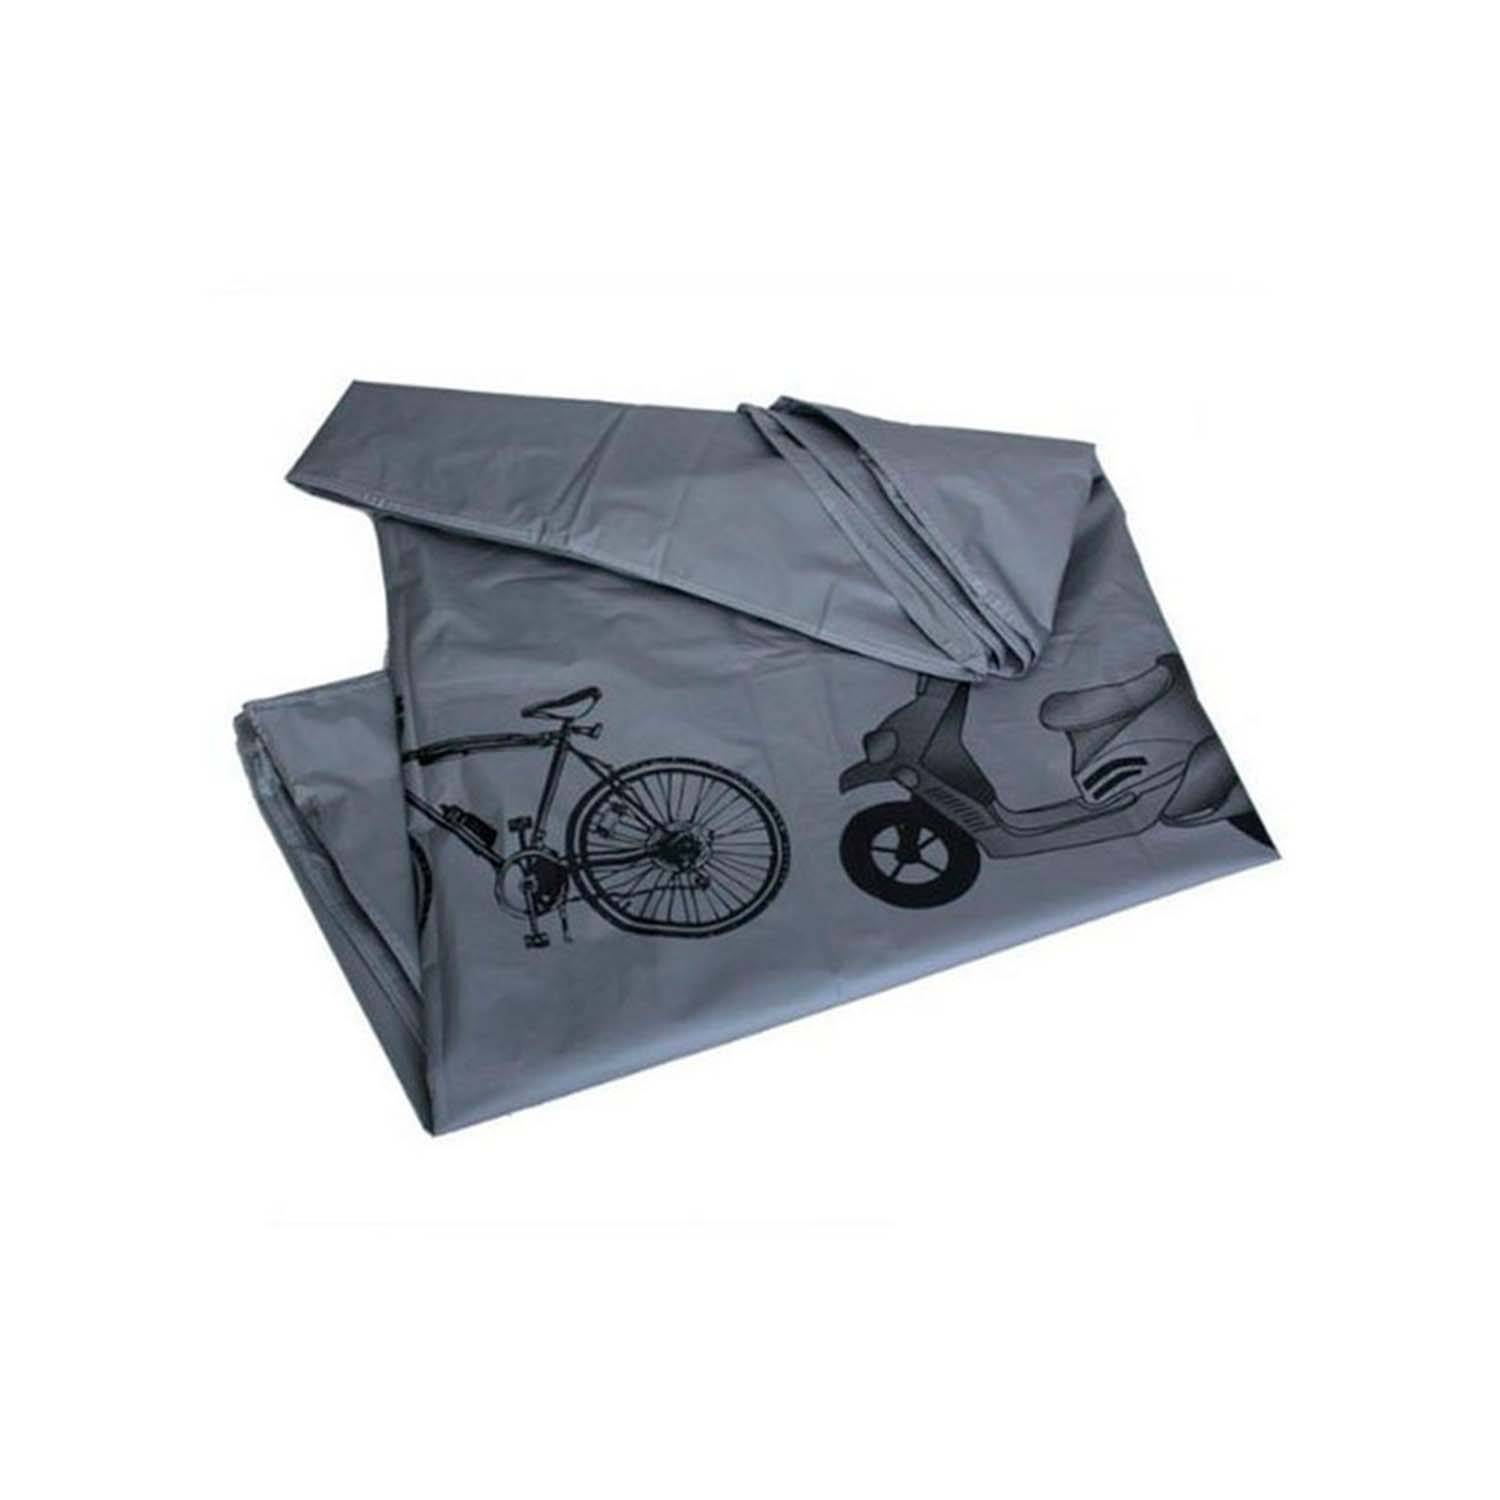 Lona impermeable para bicicleta, impermeable, funda protectora